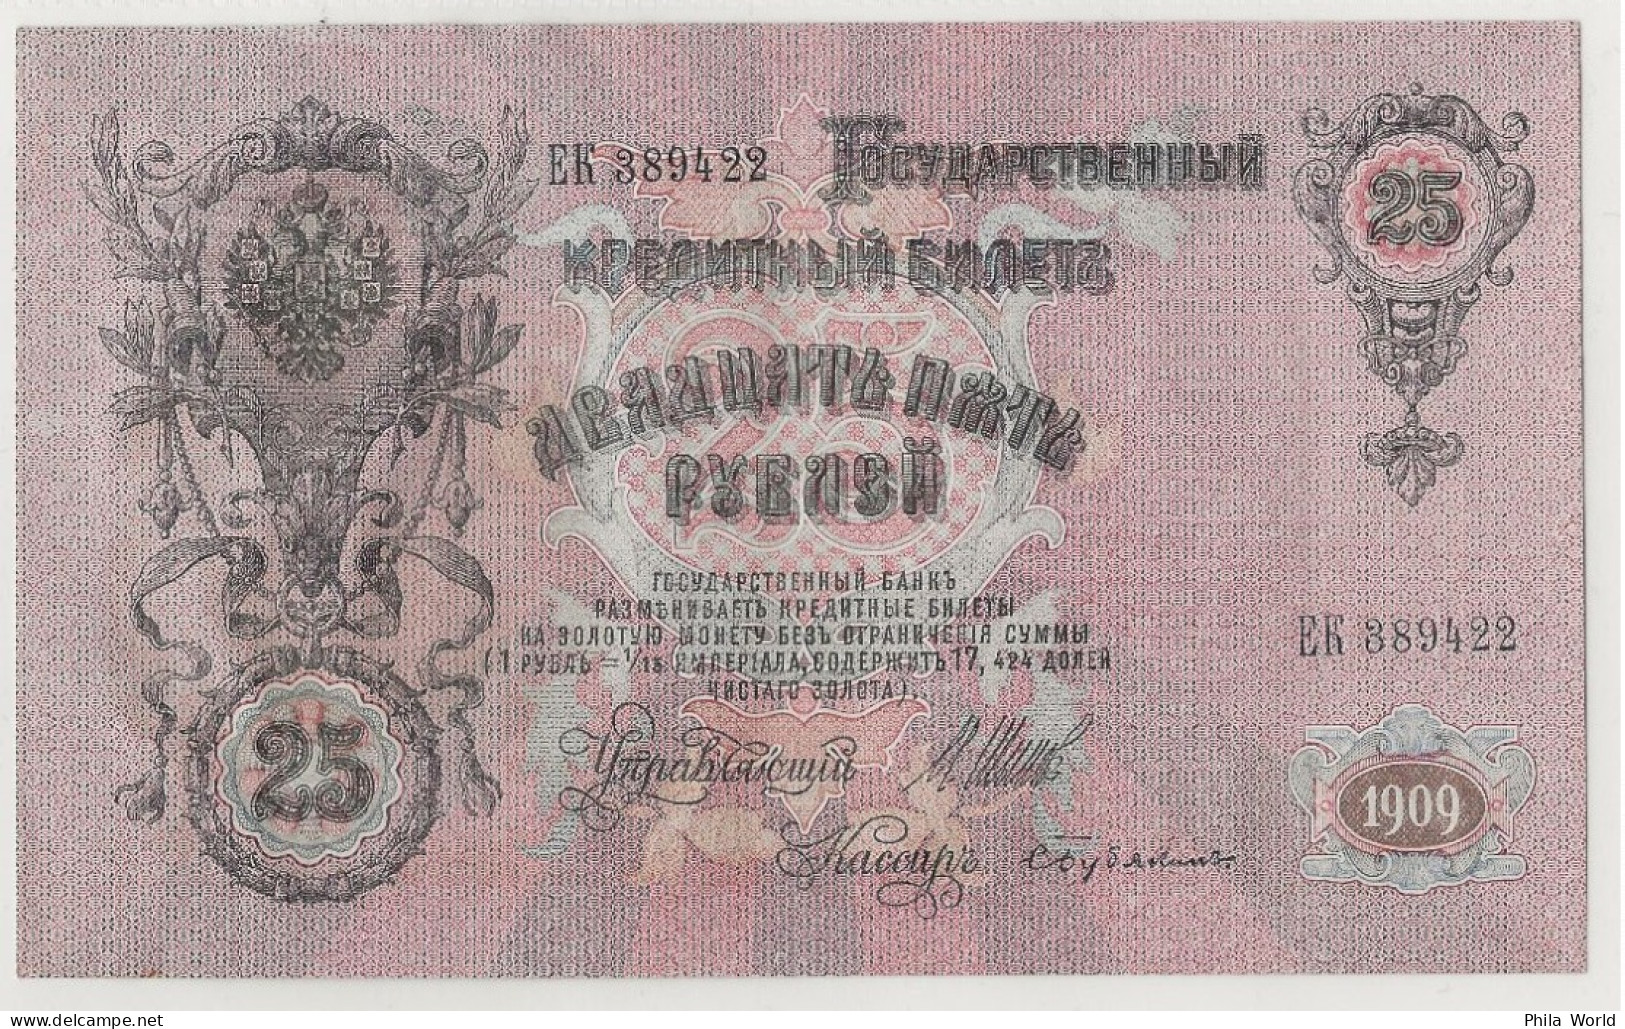 RUSSIE RUSSIA 25 ROUBLES Rubles Russian 1909 Billet Banque Bank Note Banknote Alexandre Alexander III Shipov Gusev - Rusia